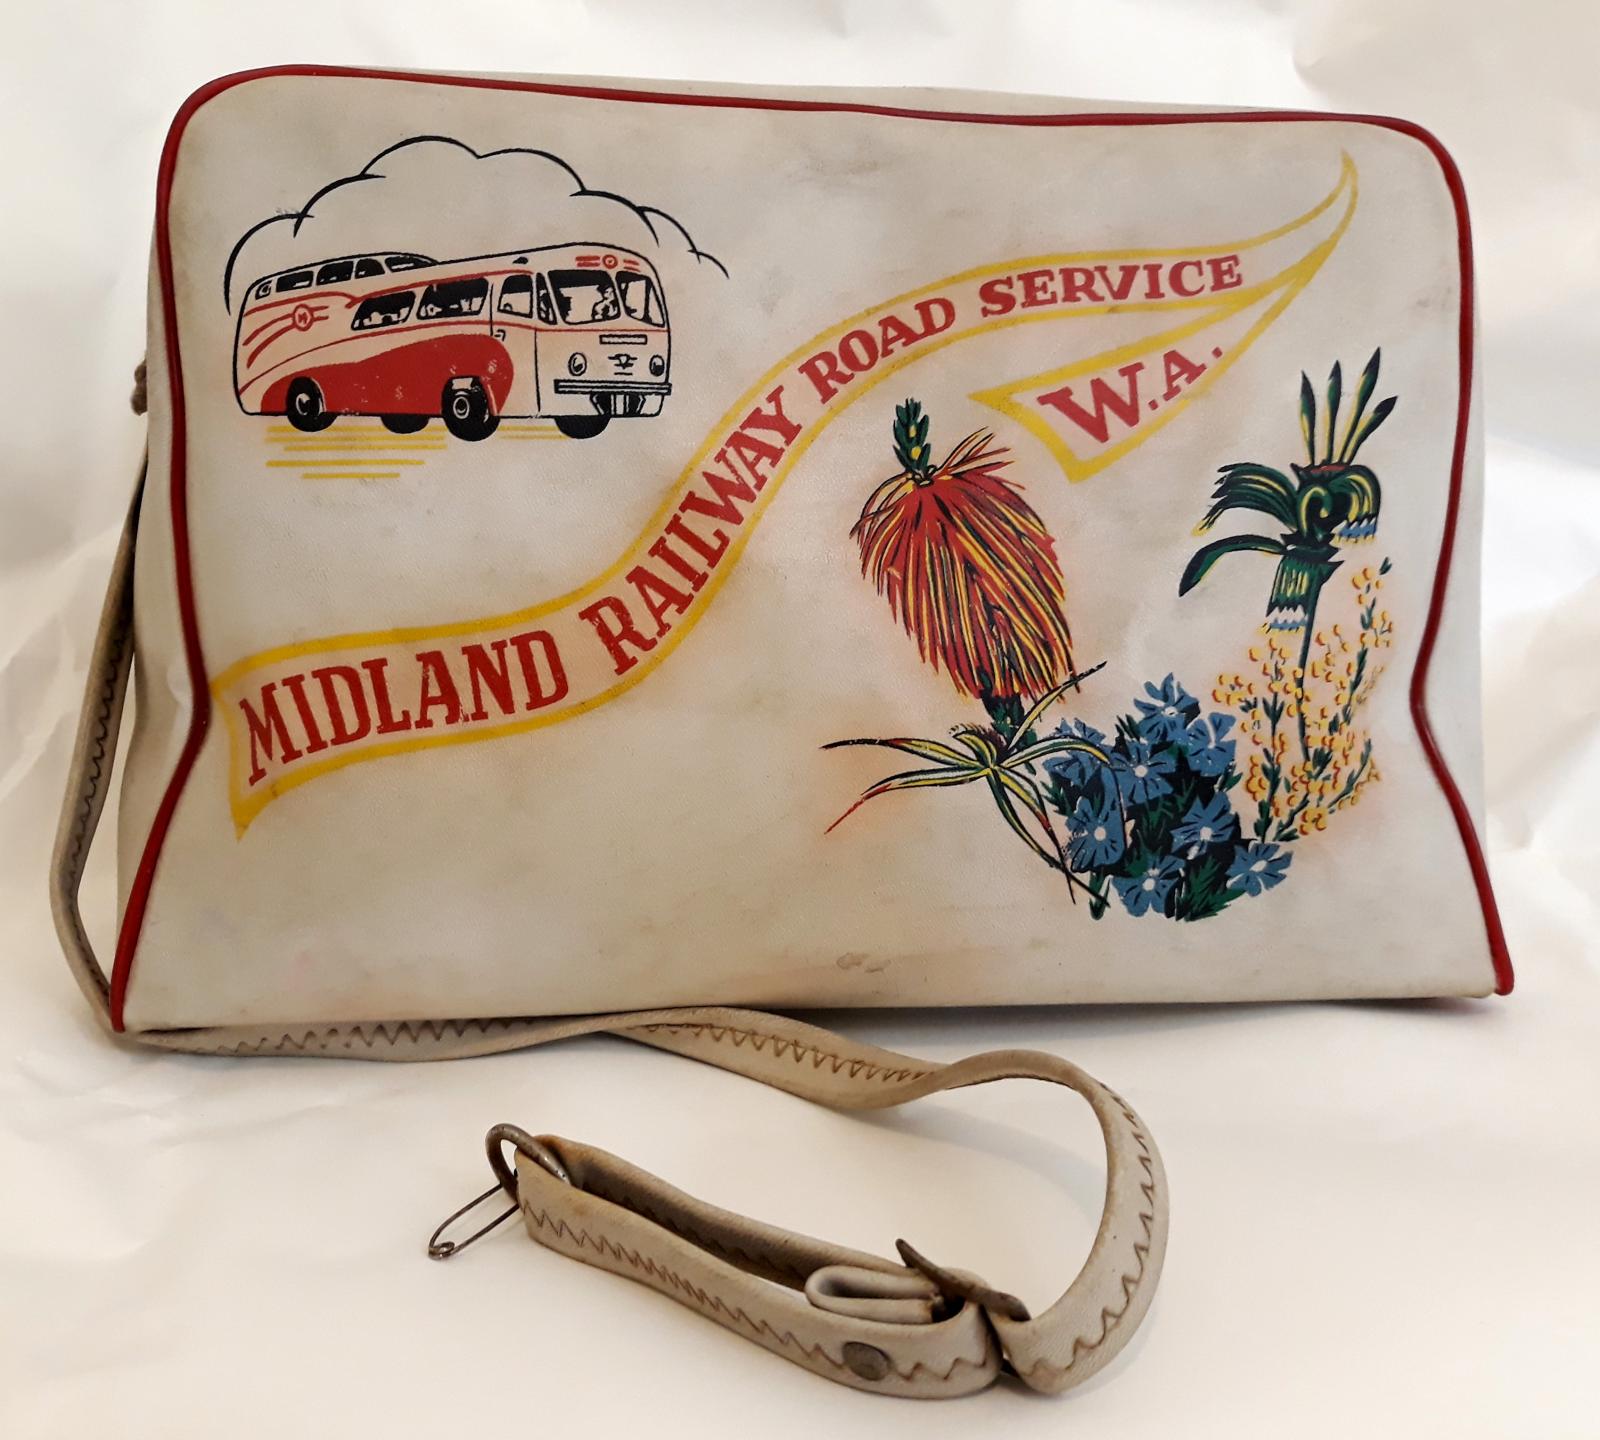 Souvenir luggage bag for the Midland Railway Road Service WA.